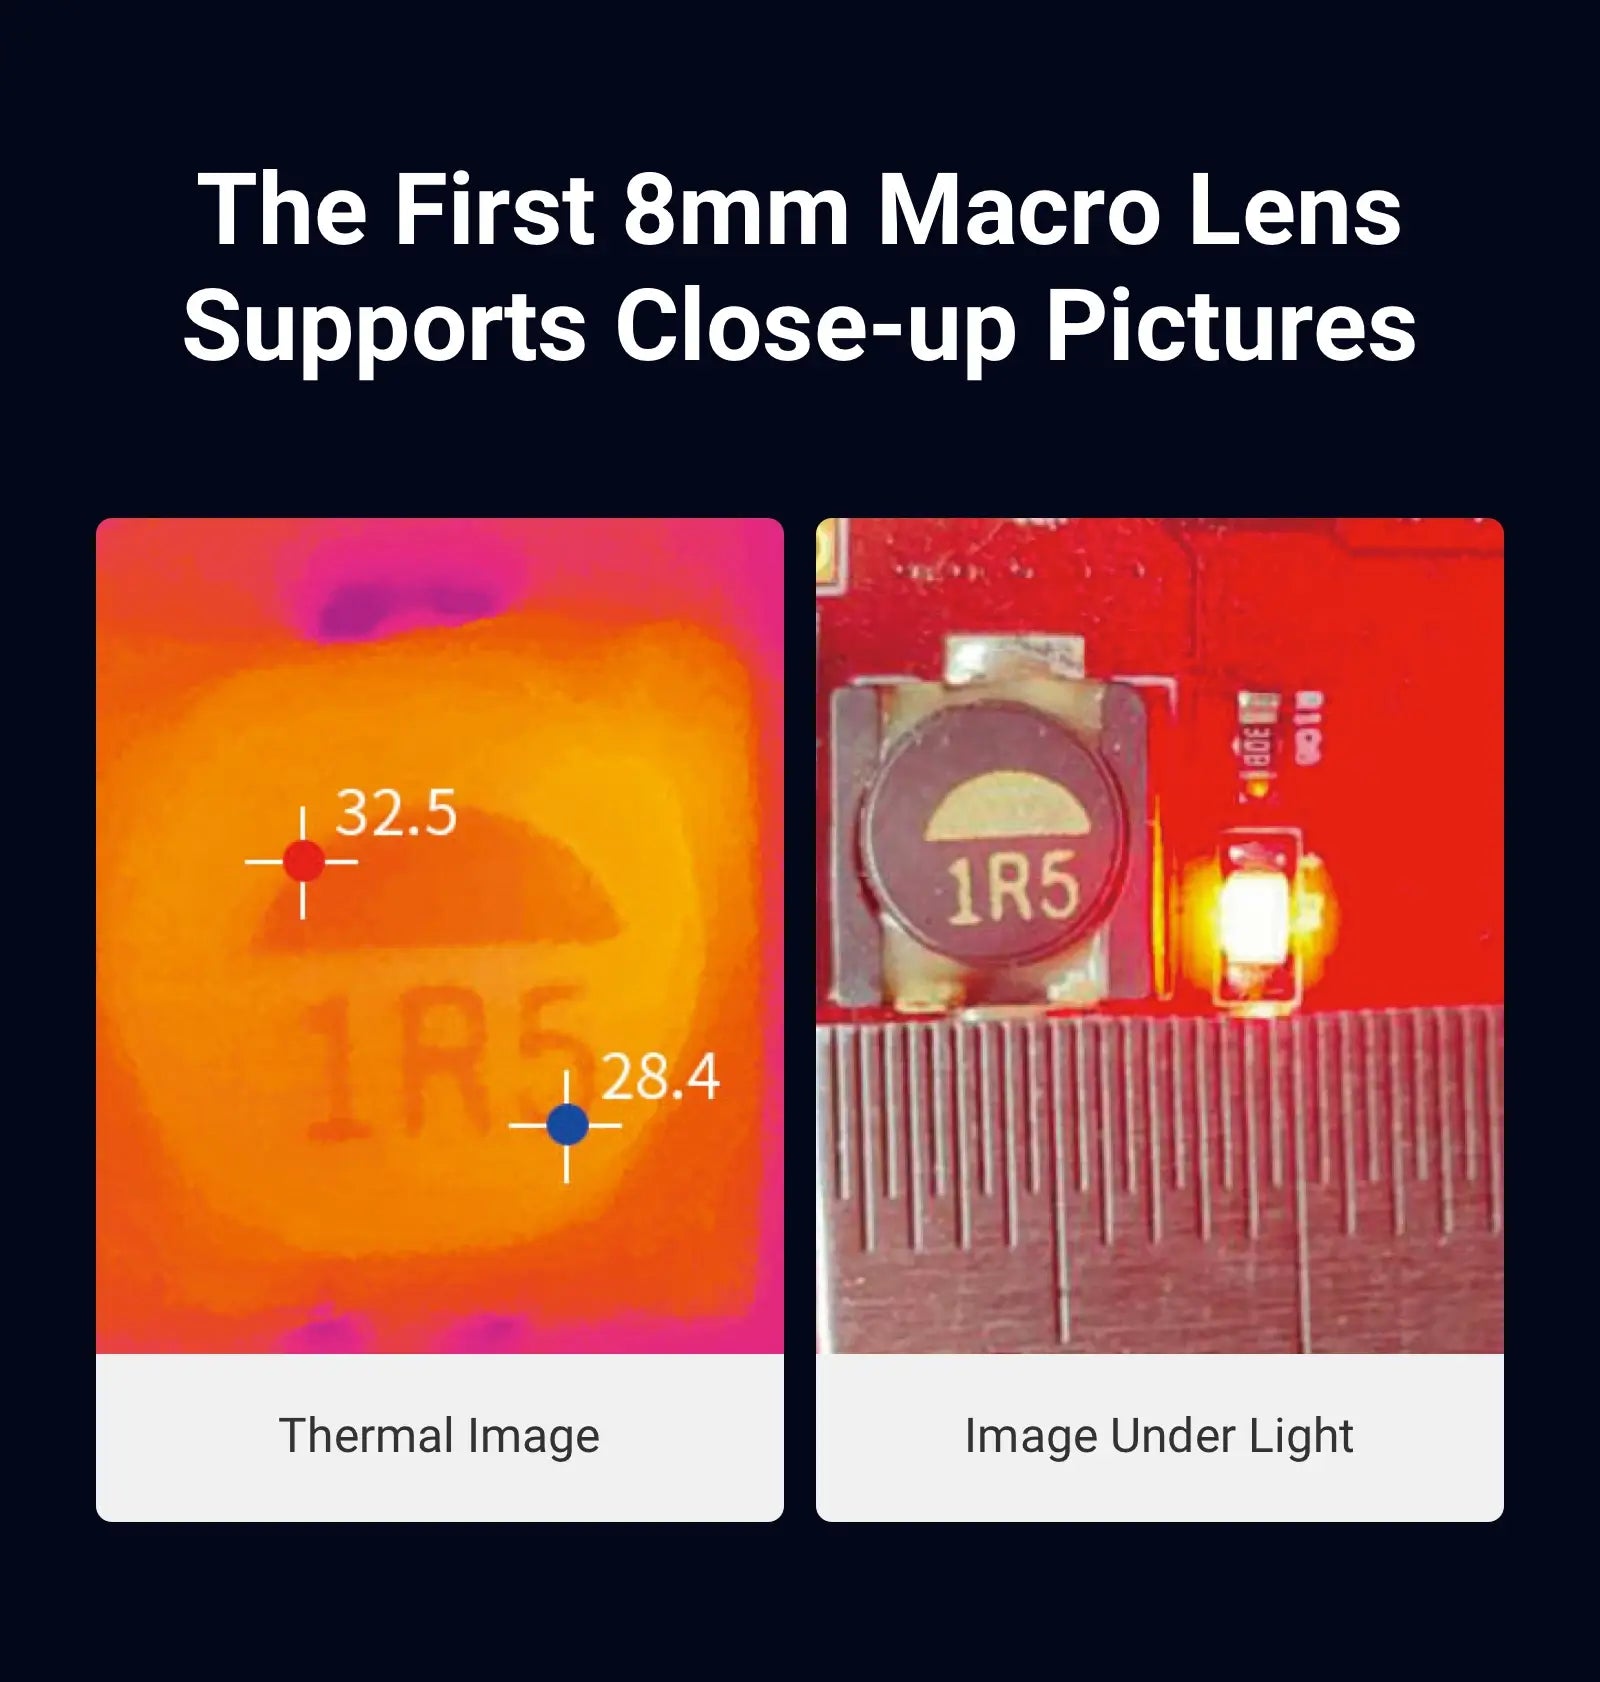 Thermal Image Image Under Light